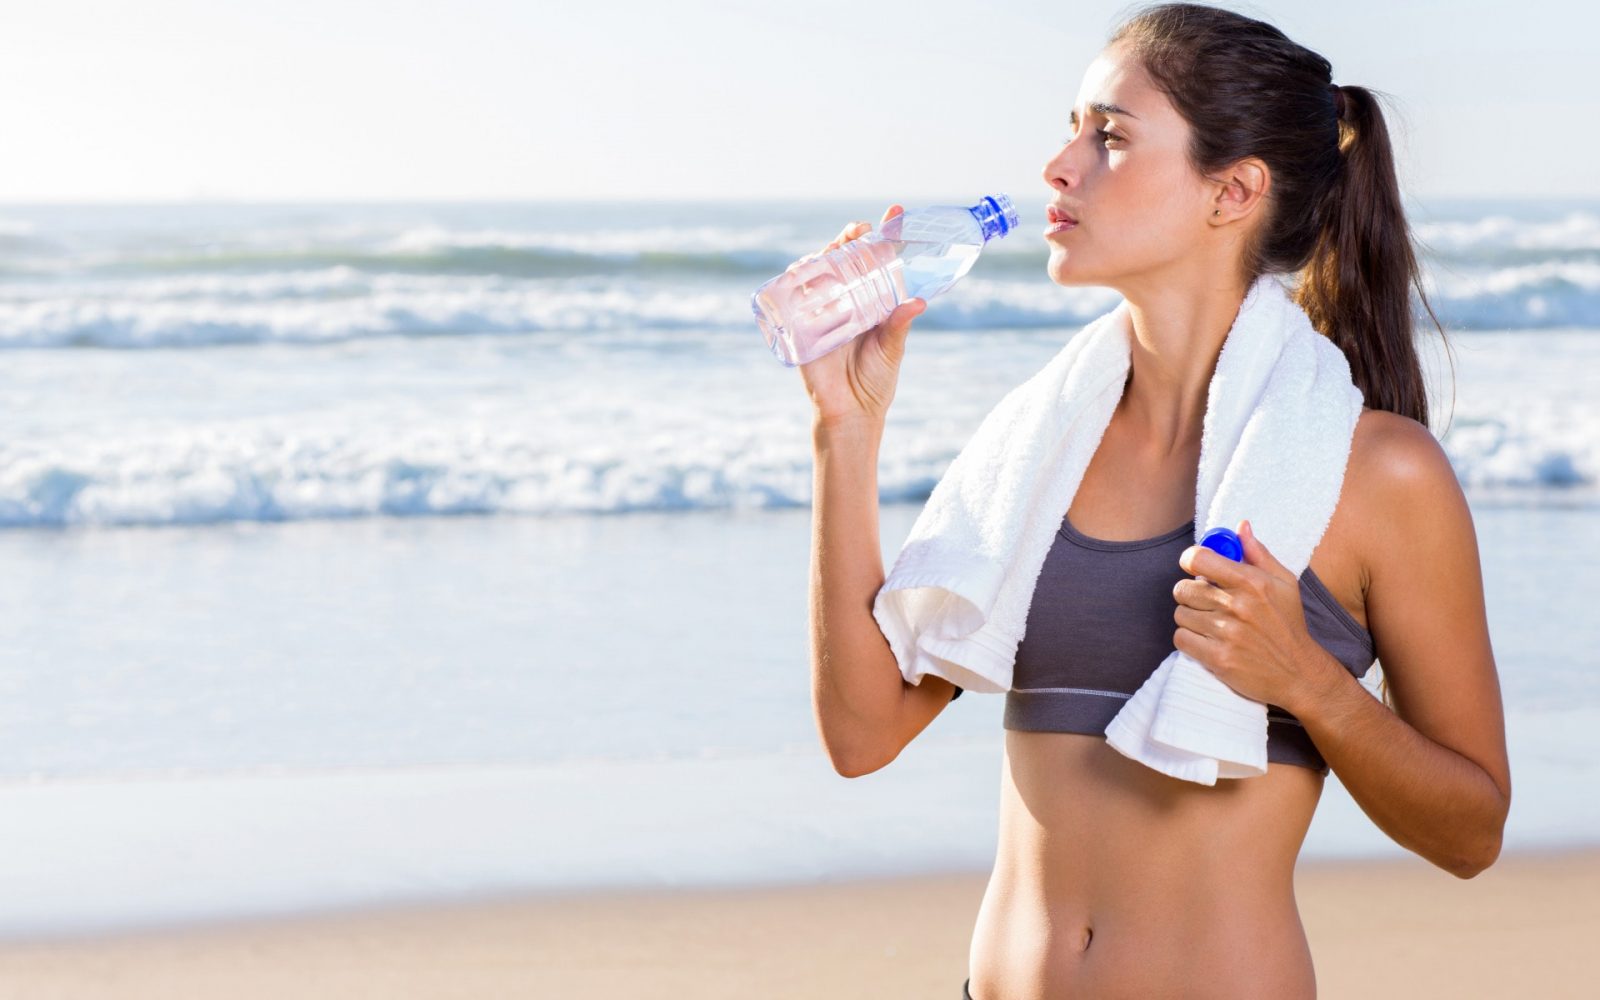 Девушка на берегу море с полотенцем на шеи и голым пузом пьет чистую воду из бутылке